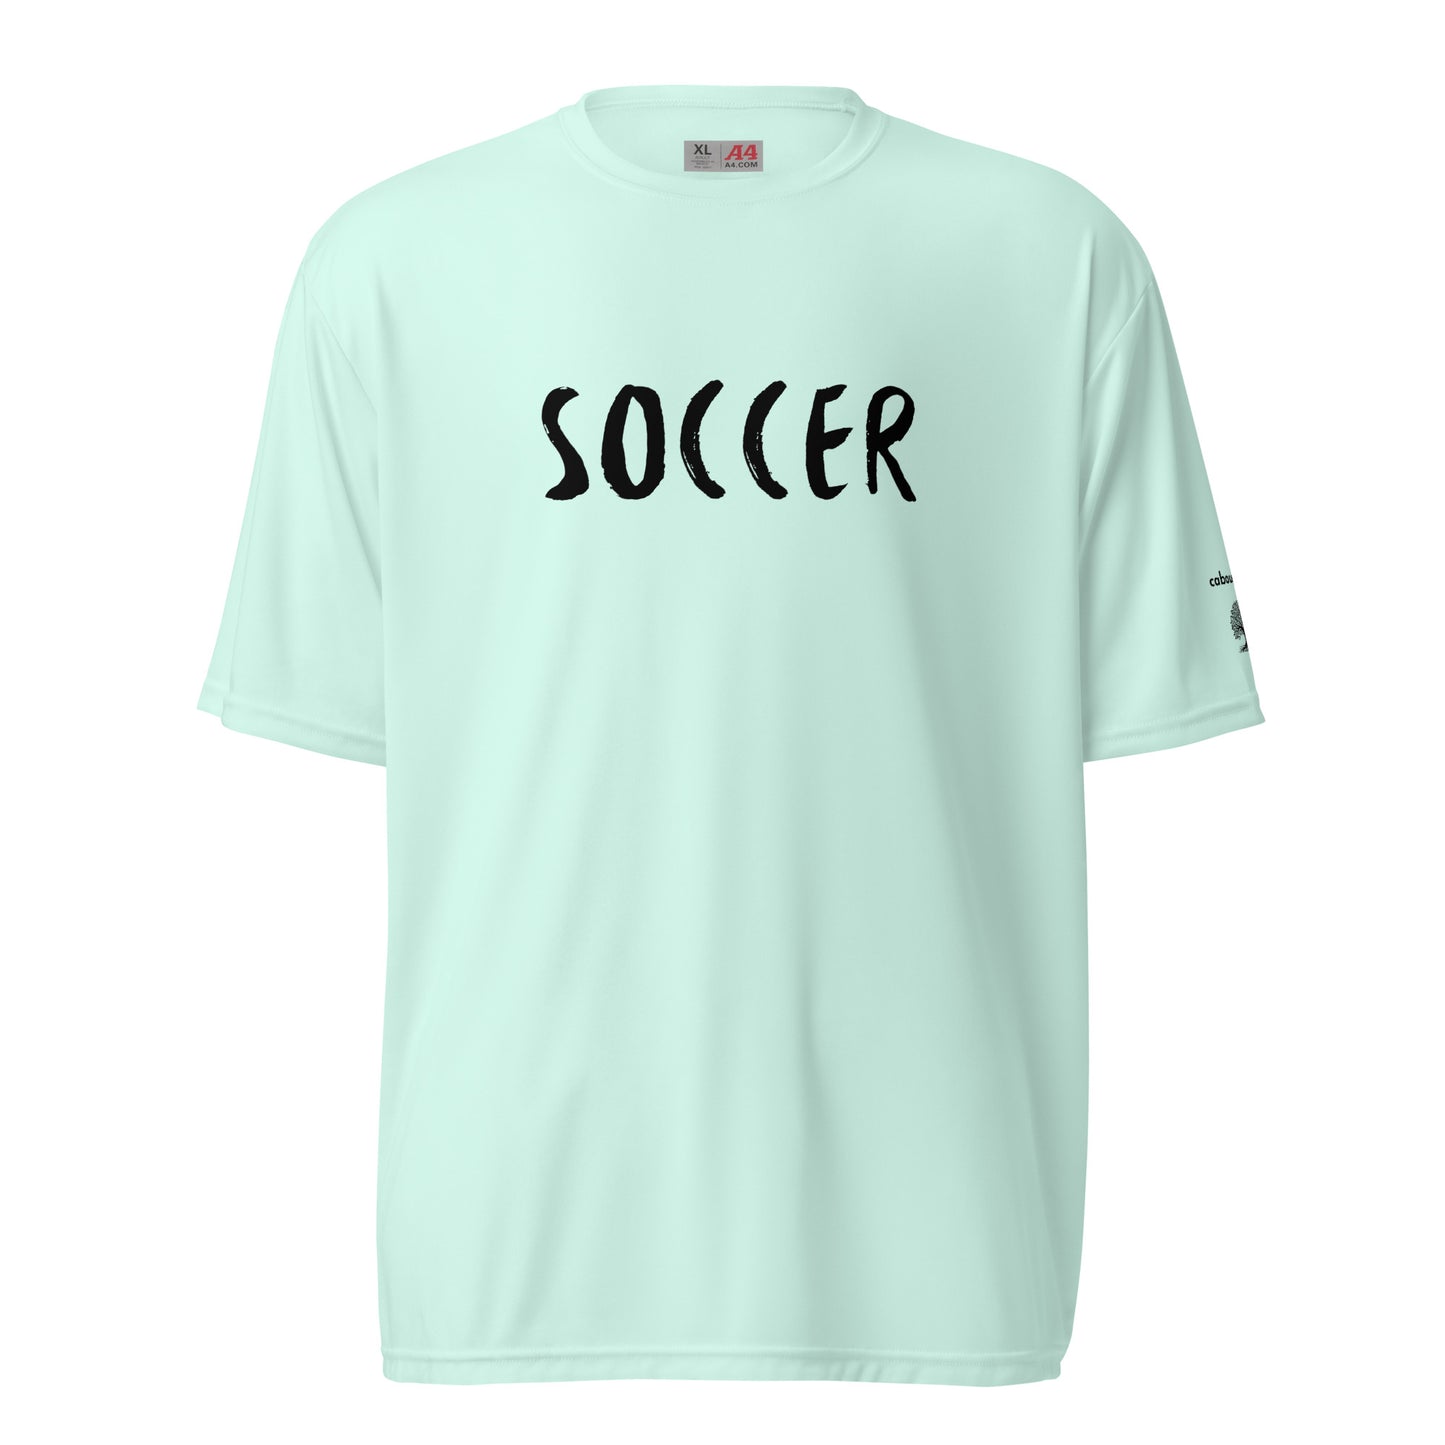 Unisex performance crew neck t-shirt - Soccer (Black)